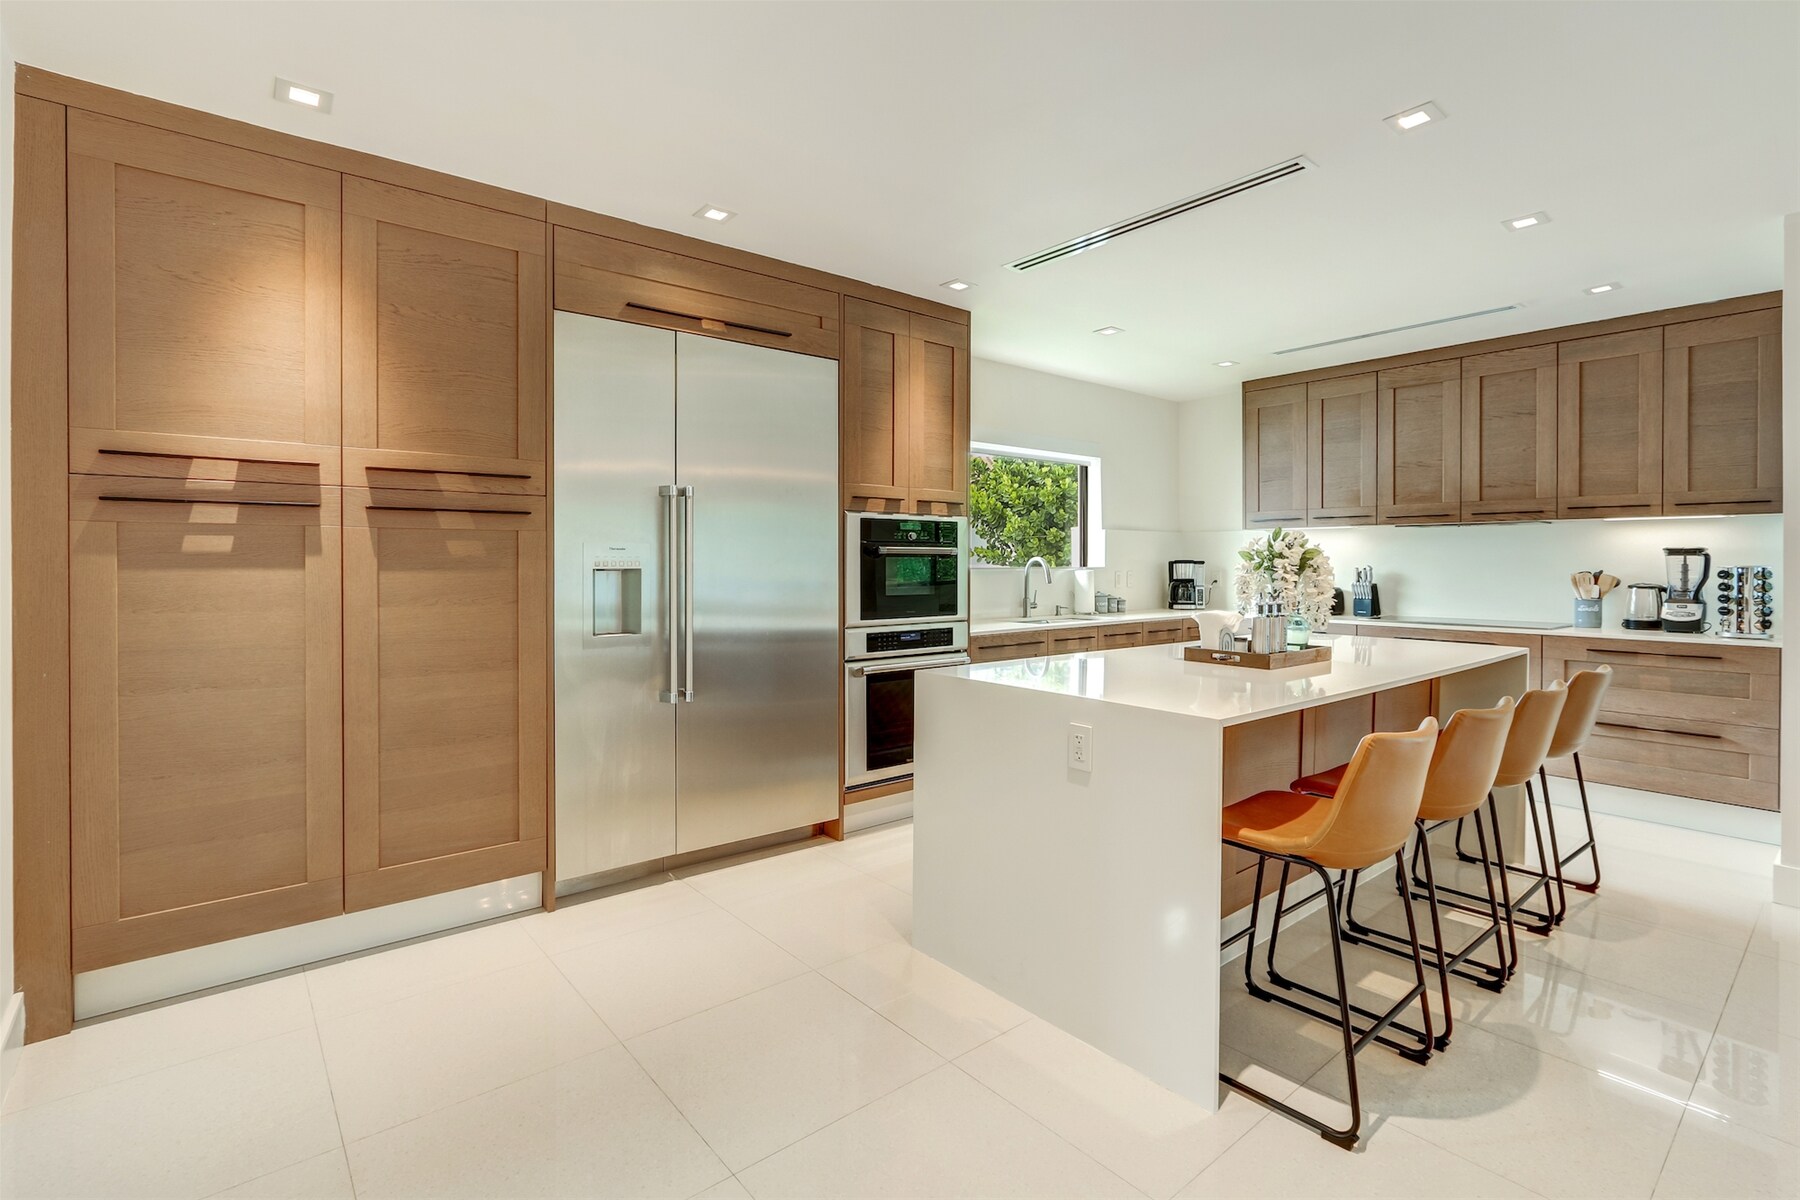 Grand kitchen renders an oversized fridge -simplifies family gatherings-